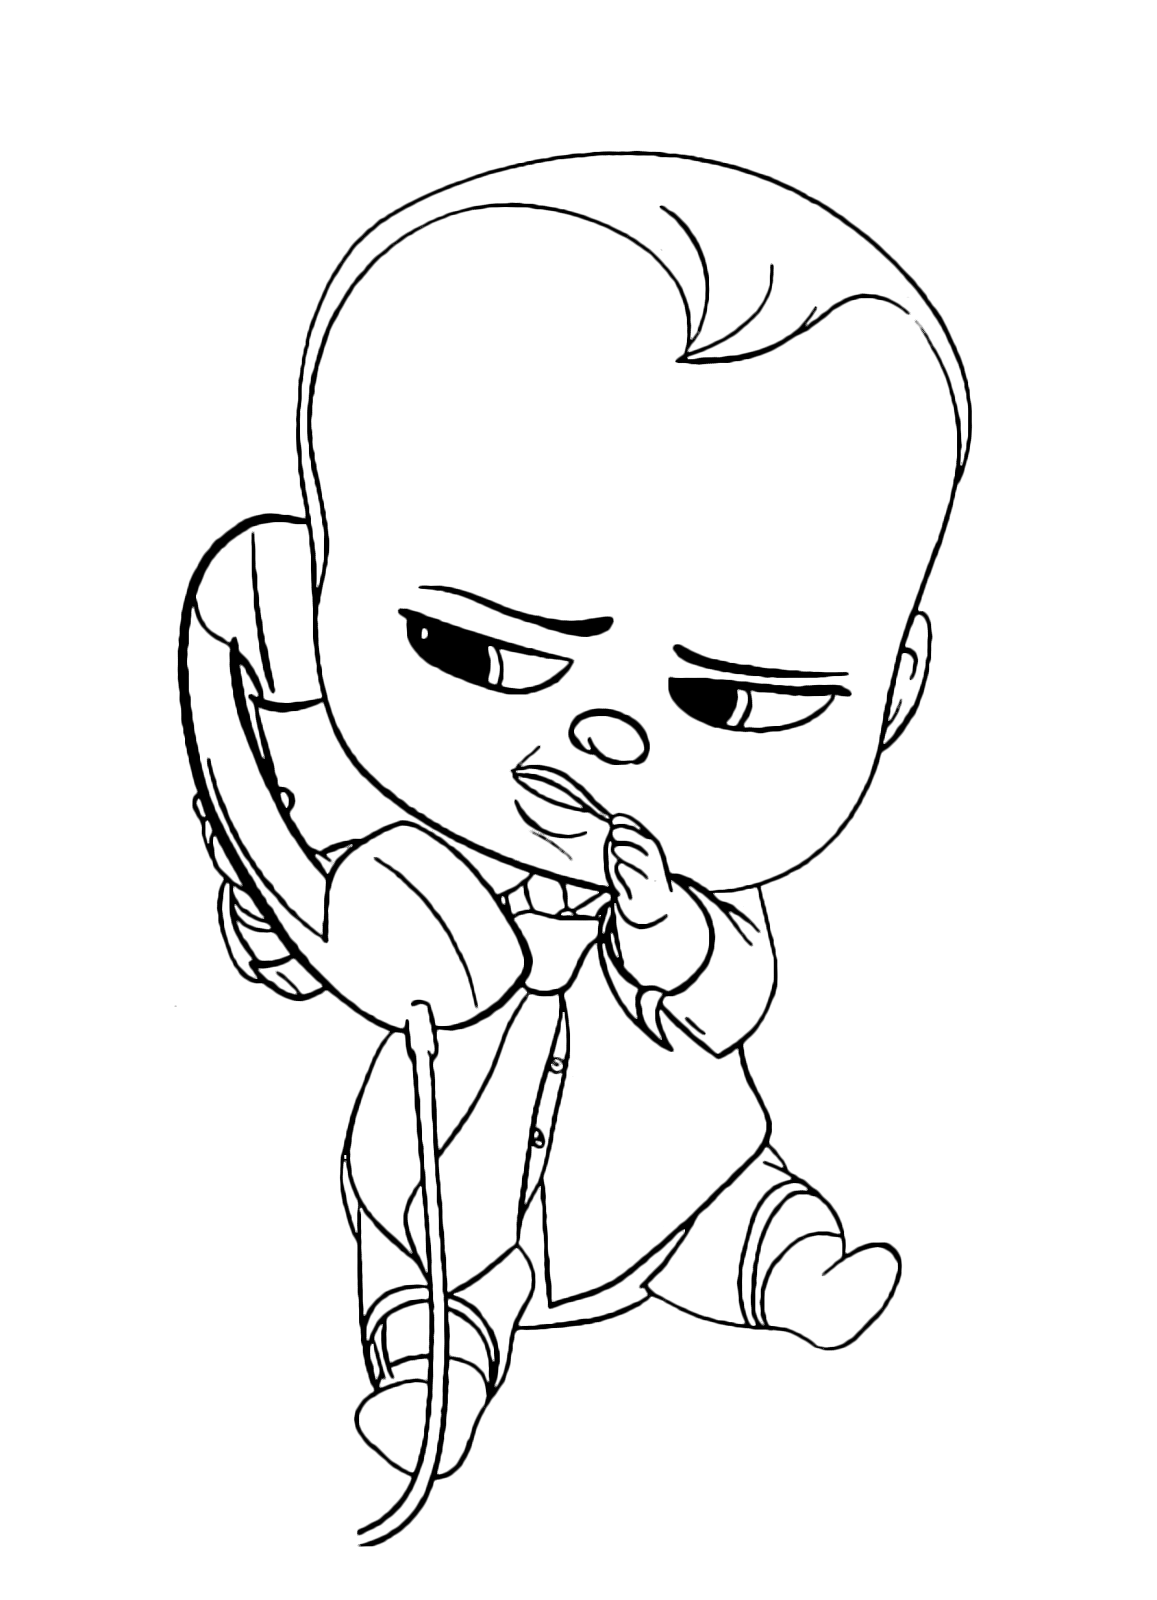 Baby Boss - Baby Boss talks on the phone in secret